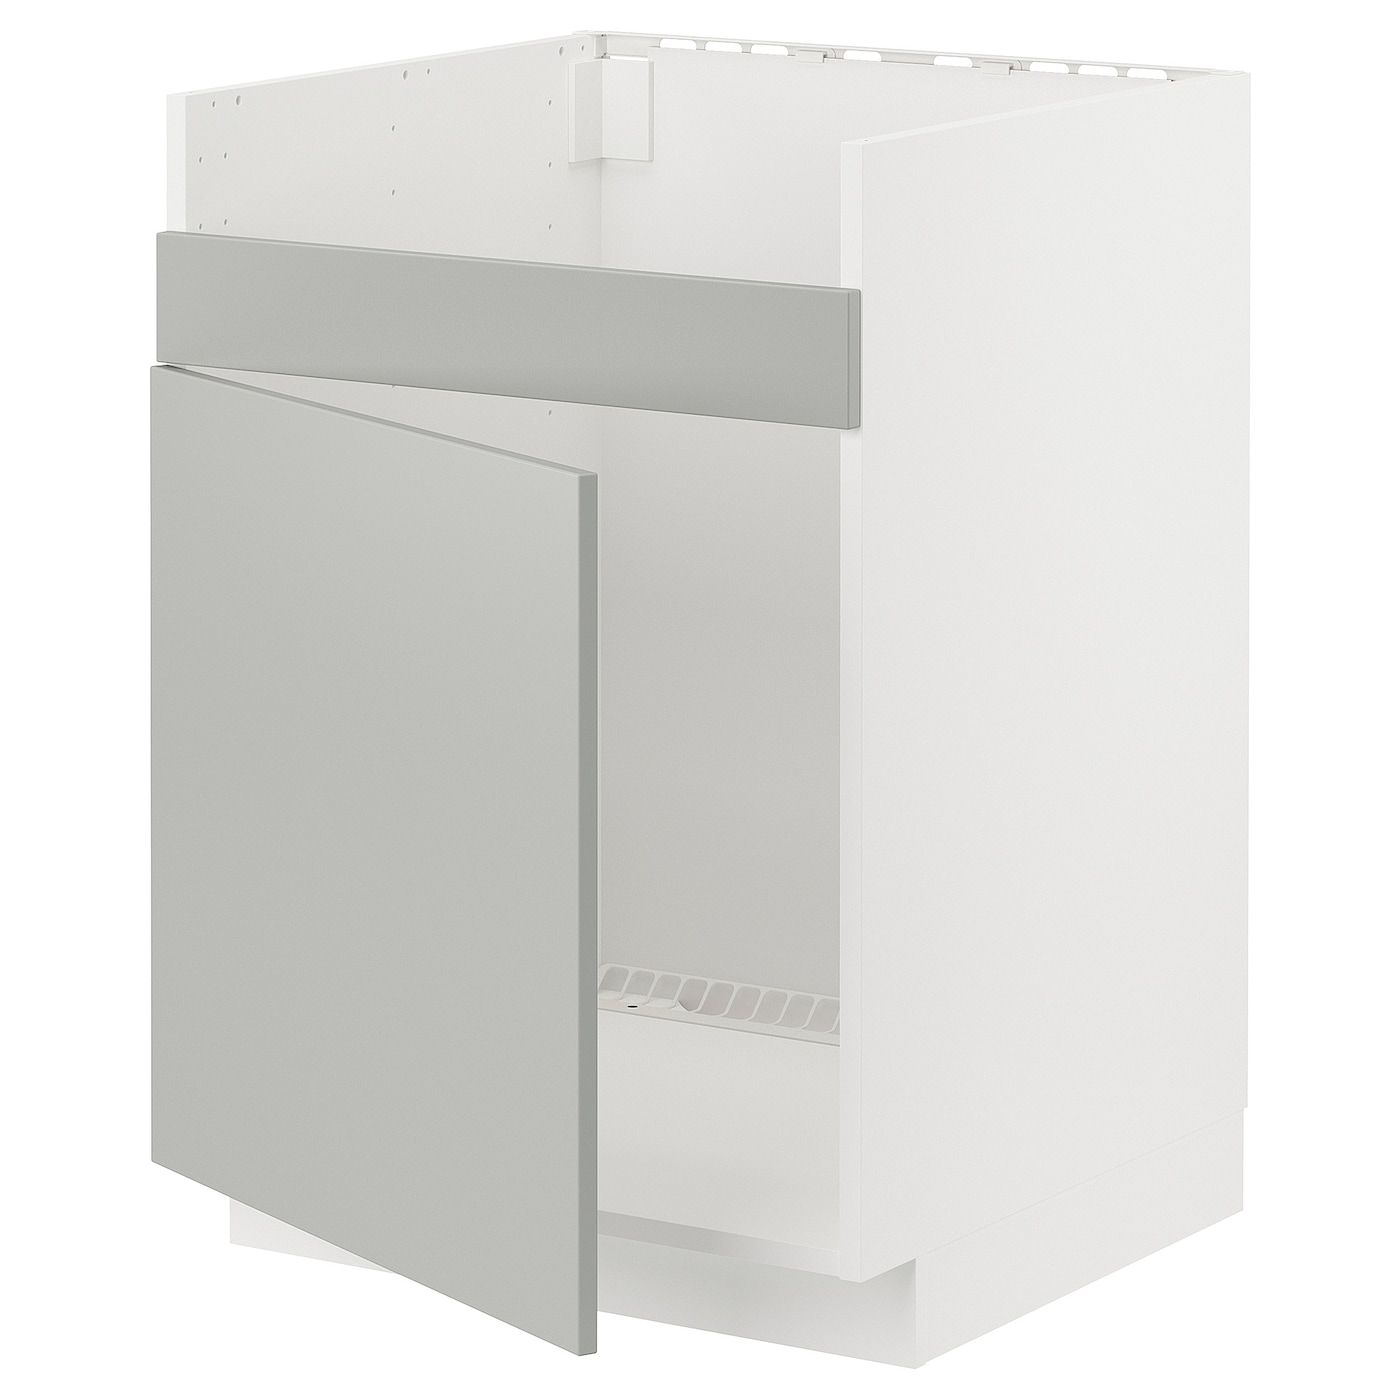 Напольный шкаф - METOD IKEA/ МЕТОД ИКЕА,  88х60  см, белый/светло-серый